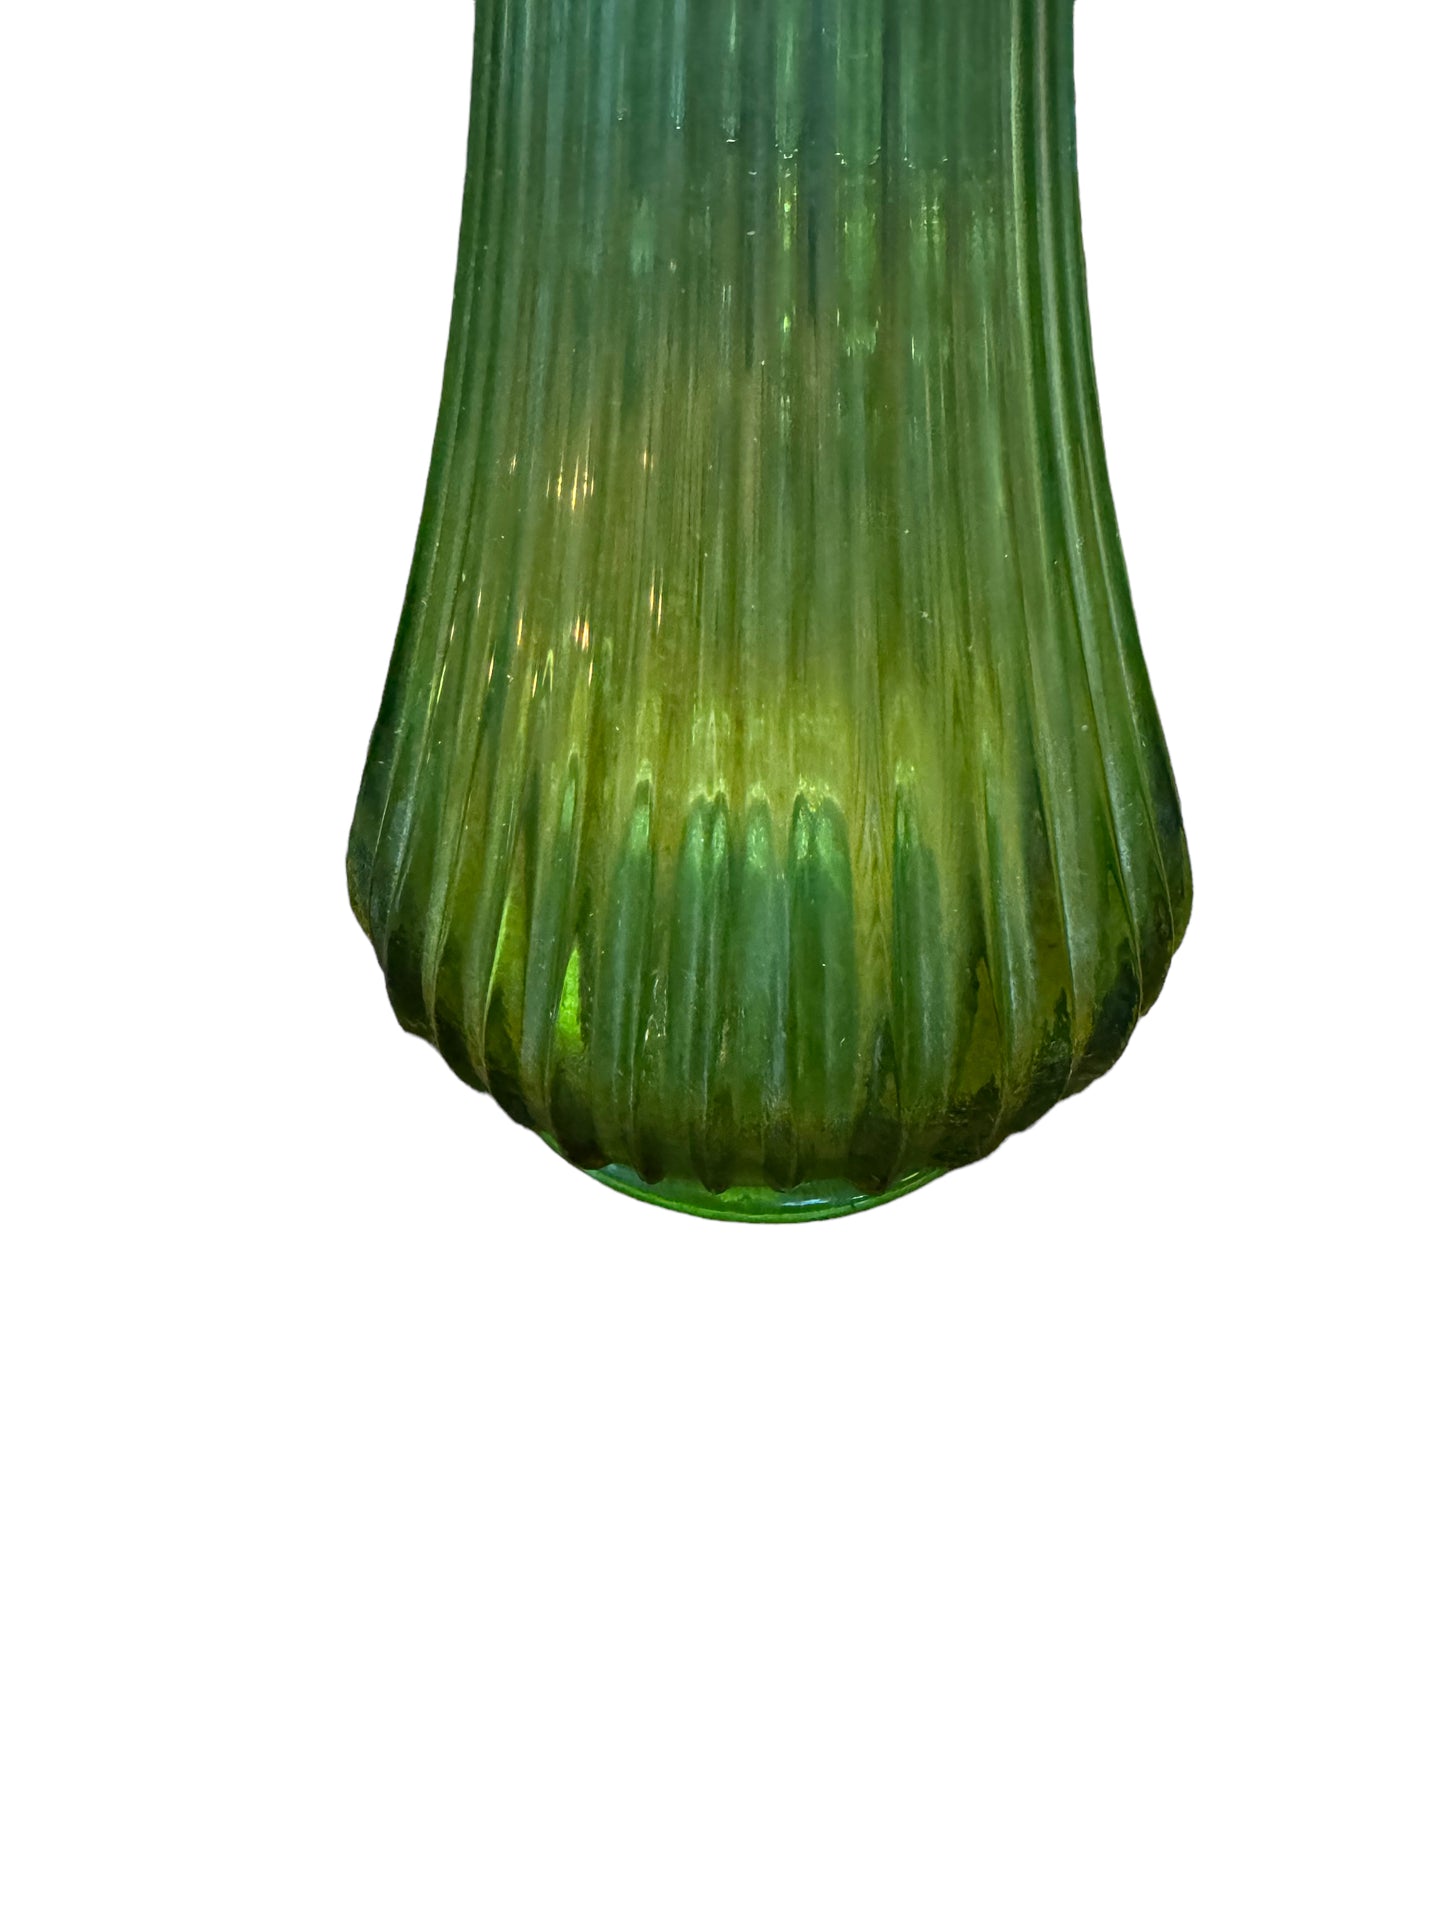 L.E. Smith 20” Broken Column Vase in Green